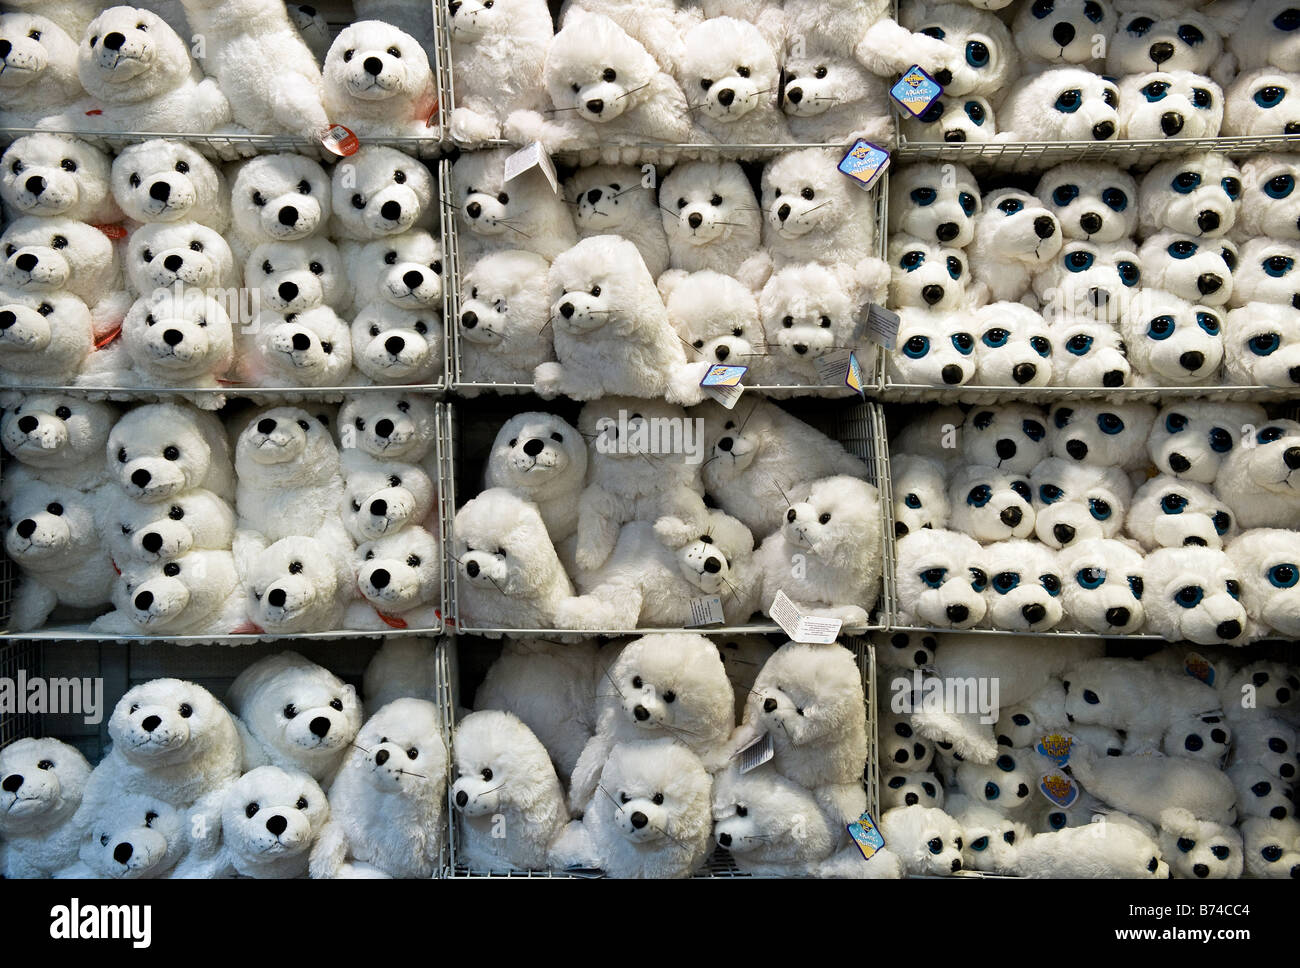 Stuffed animal store -Fotos und -Bildmaterial in hoher Auflösung – Alamy